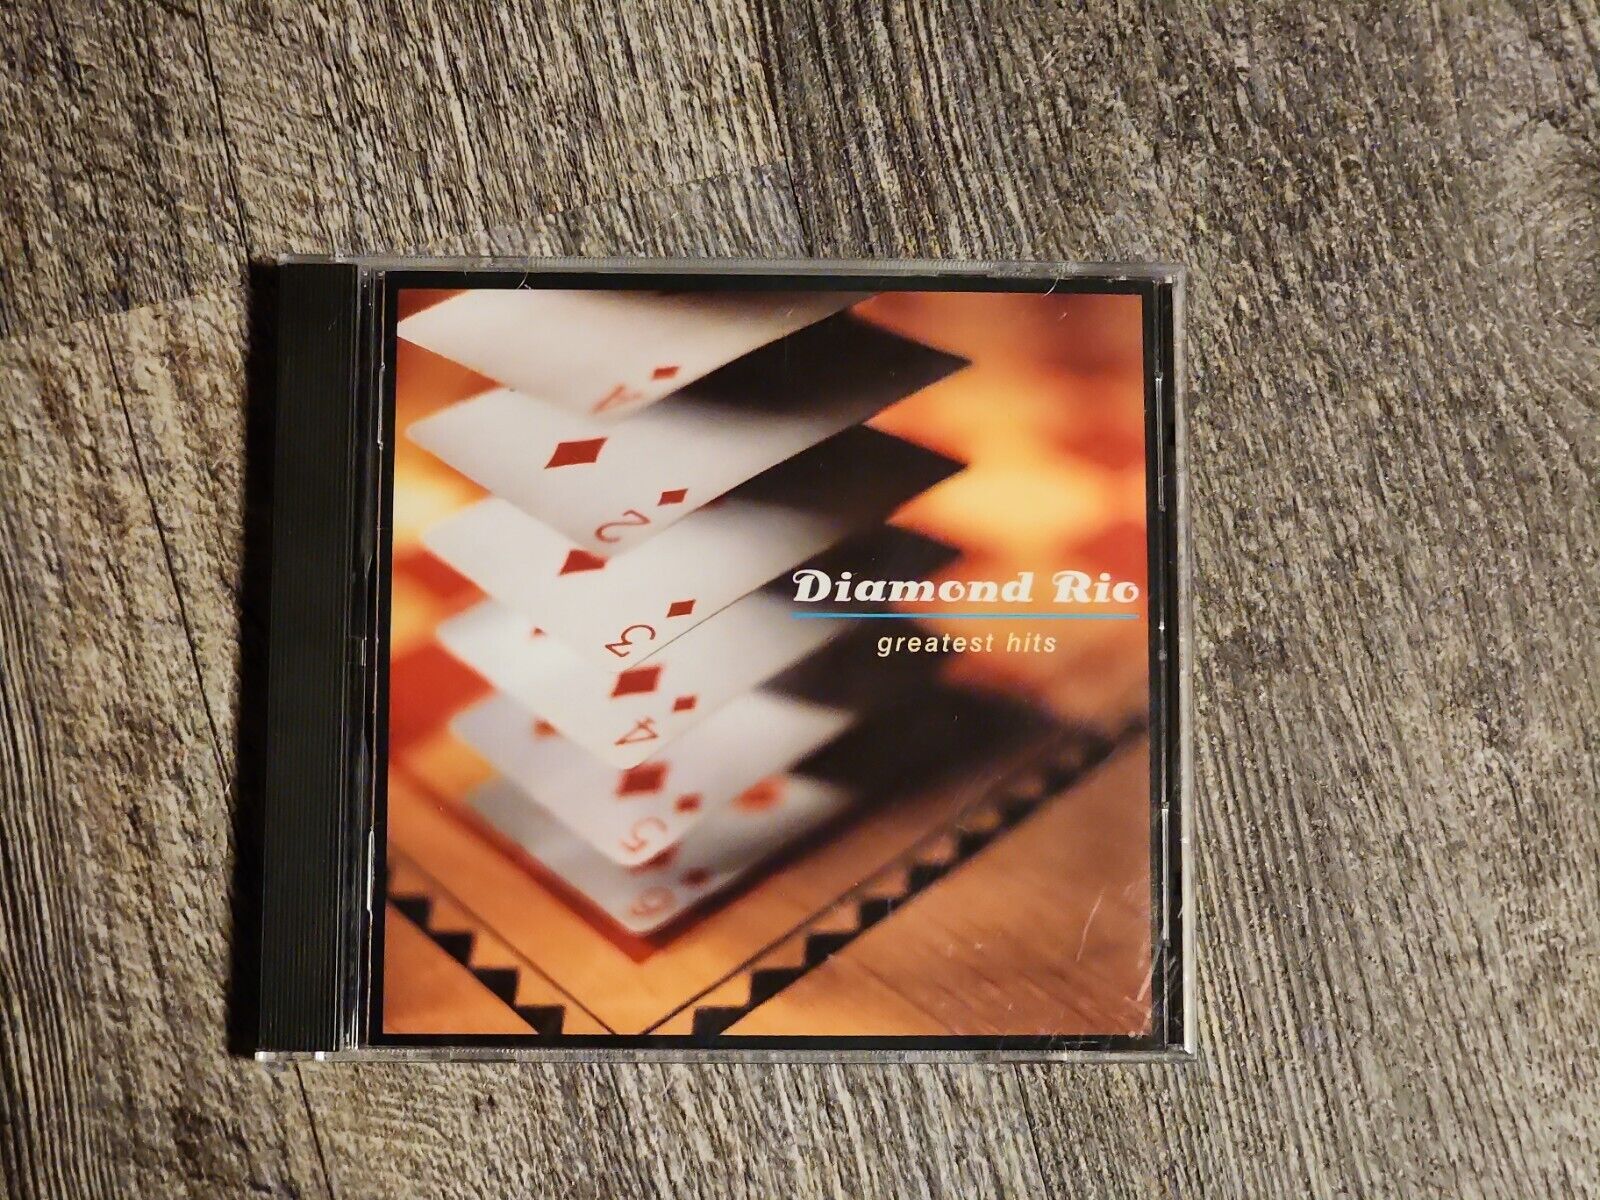 Greatest Hits by Diamond Rio (CD, 1997) 886976974428 | eBay